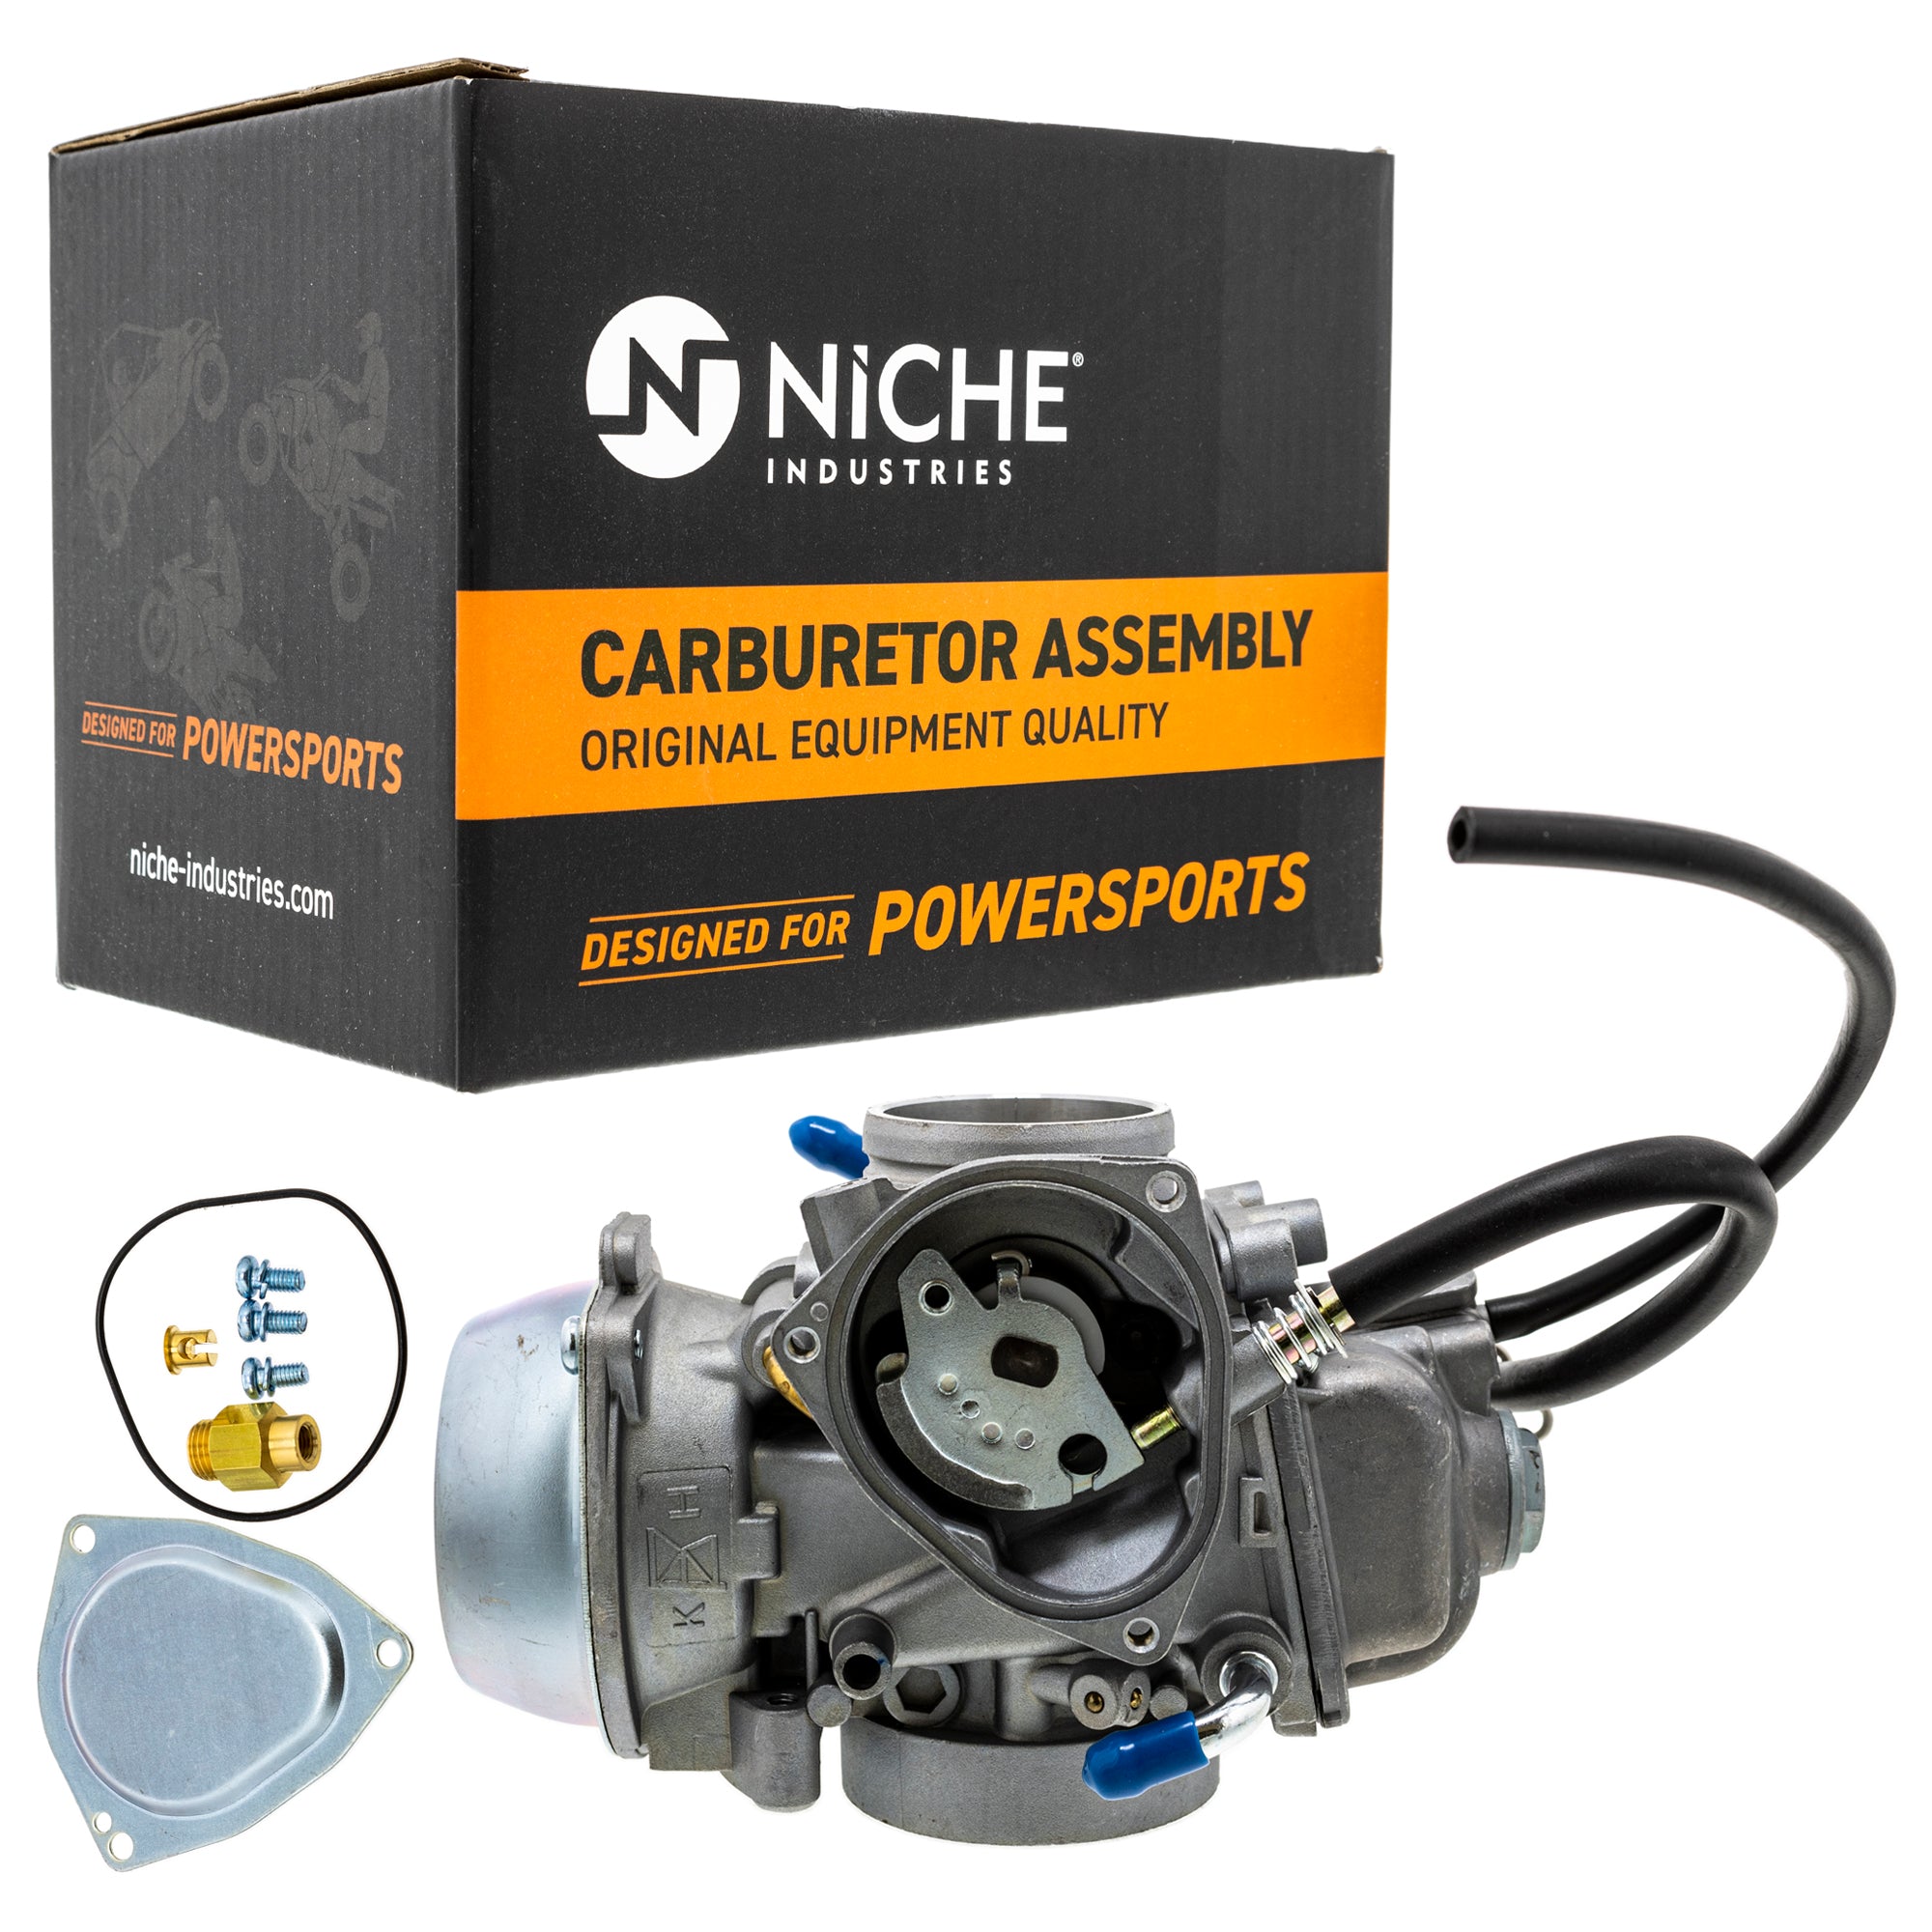 NICHE 519-KCR2220B Carburetor Assembly for Polaris Worker Trail